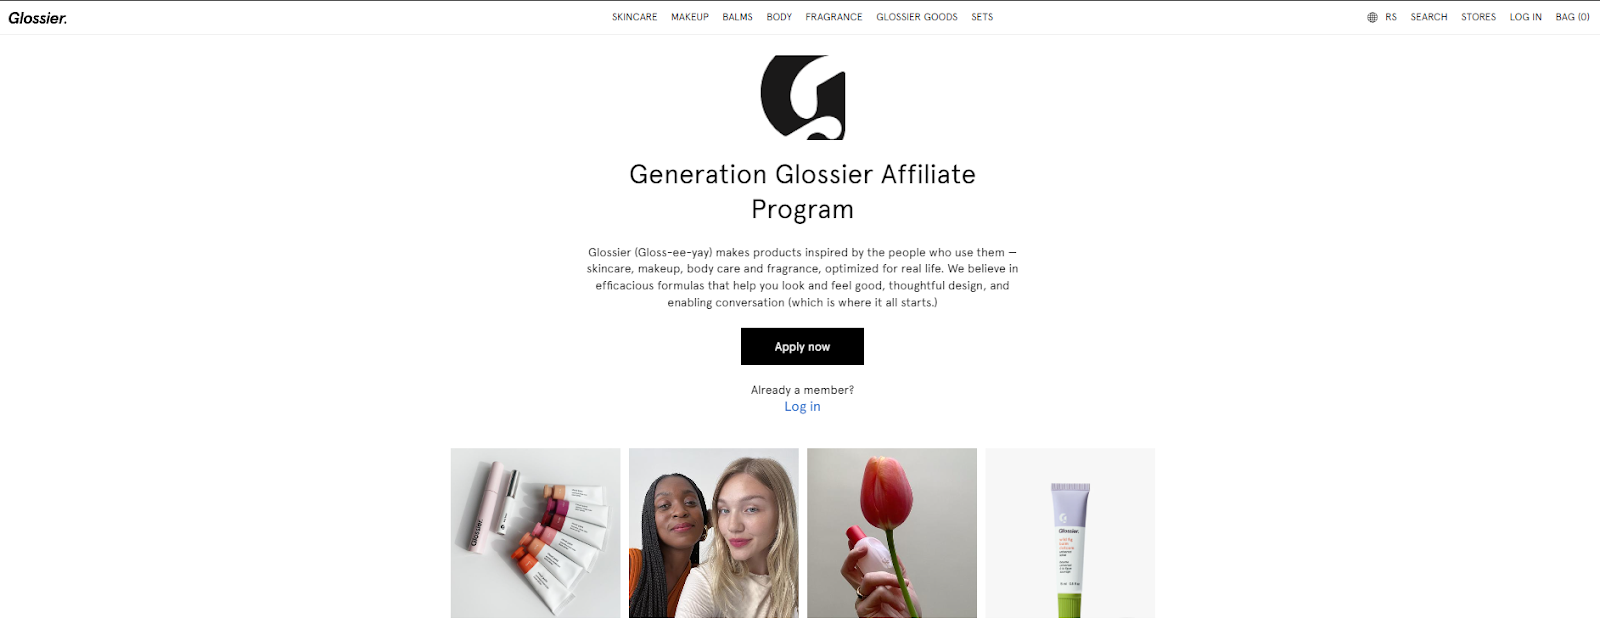 Glossier beauty rewards program